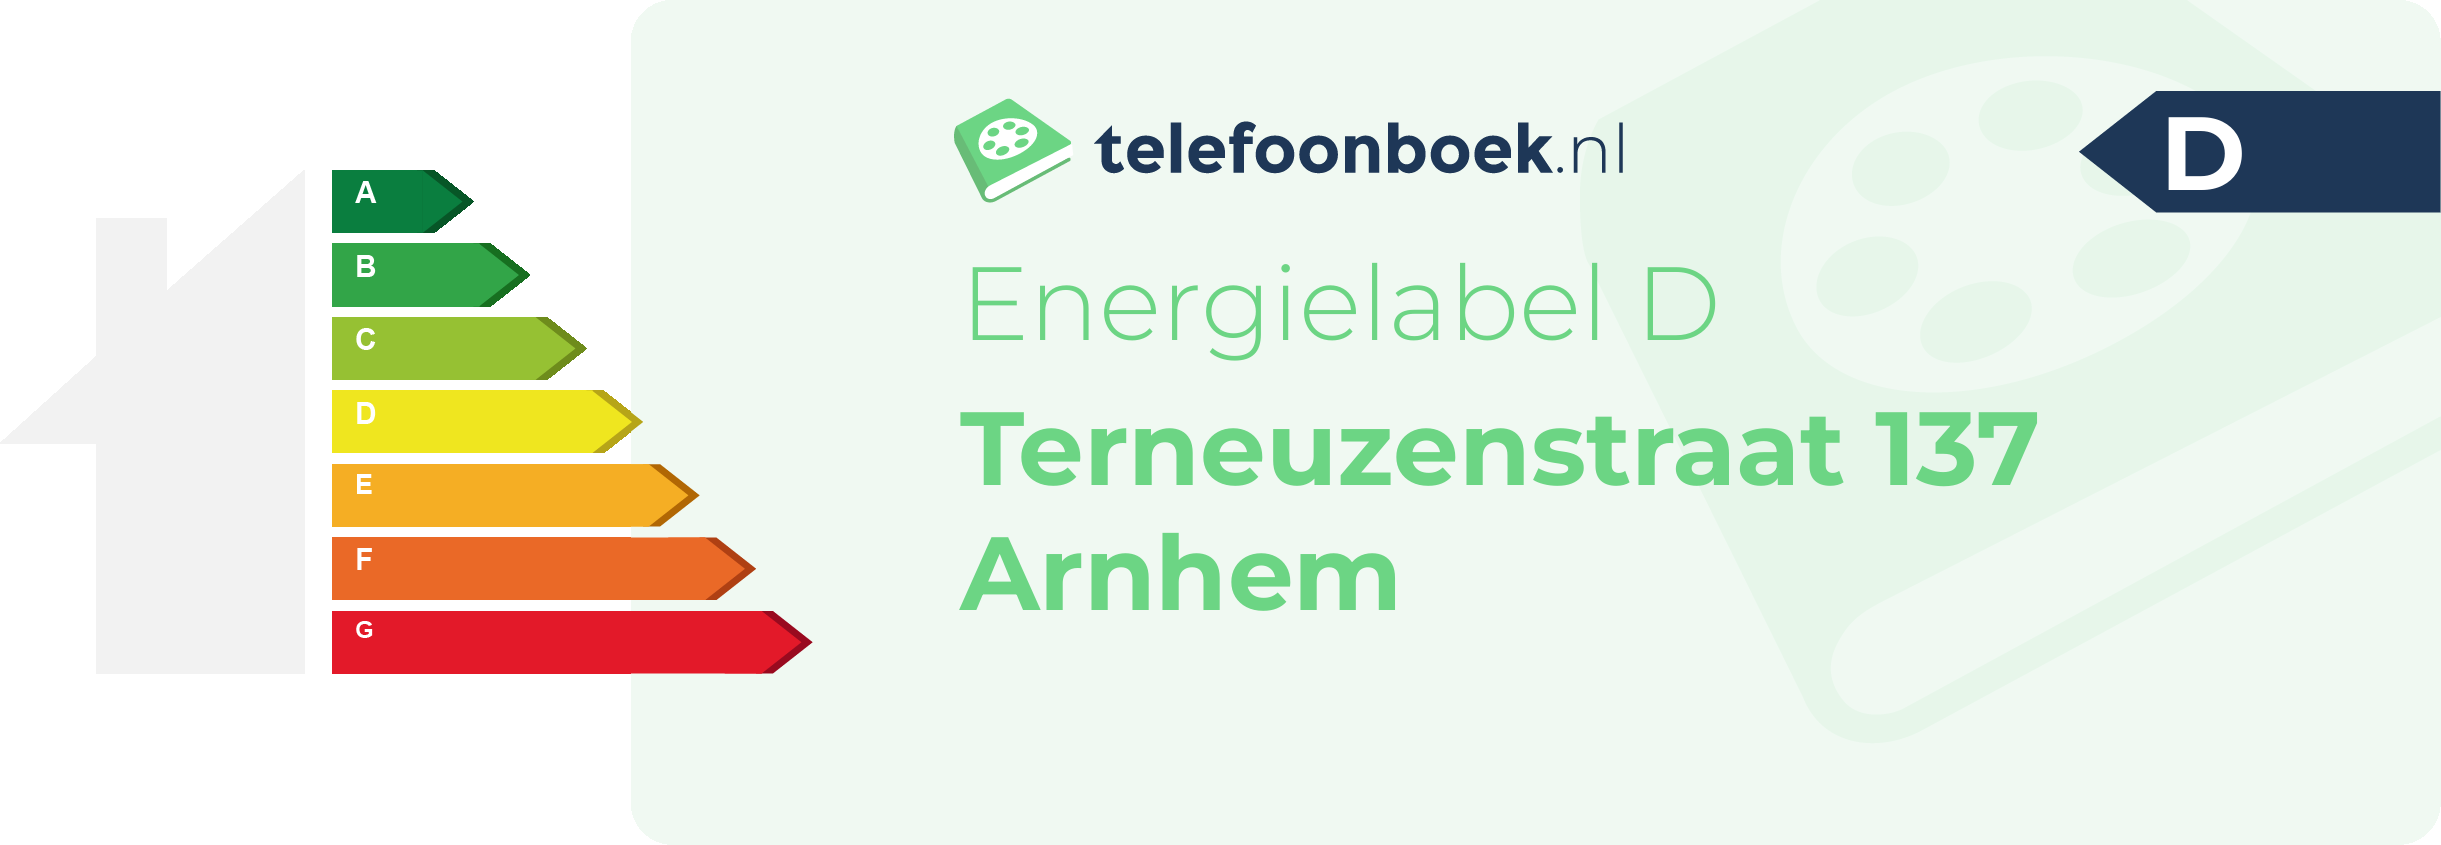 Energielabel Terneuzenstraat 137 Arnhem